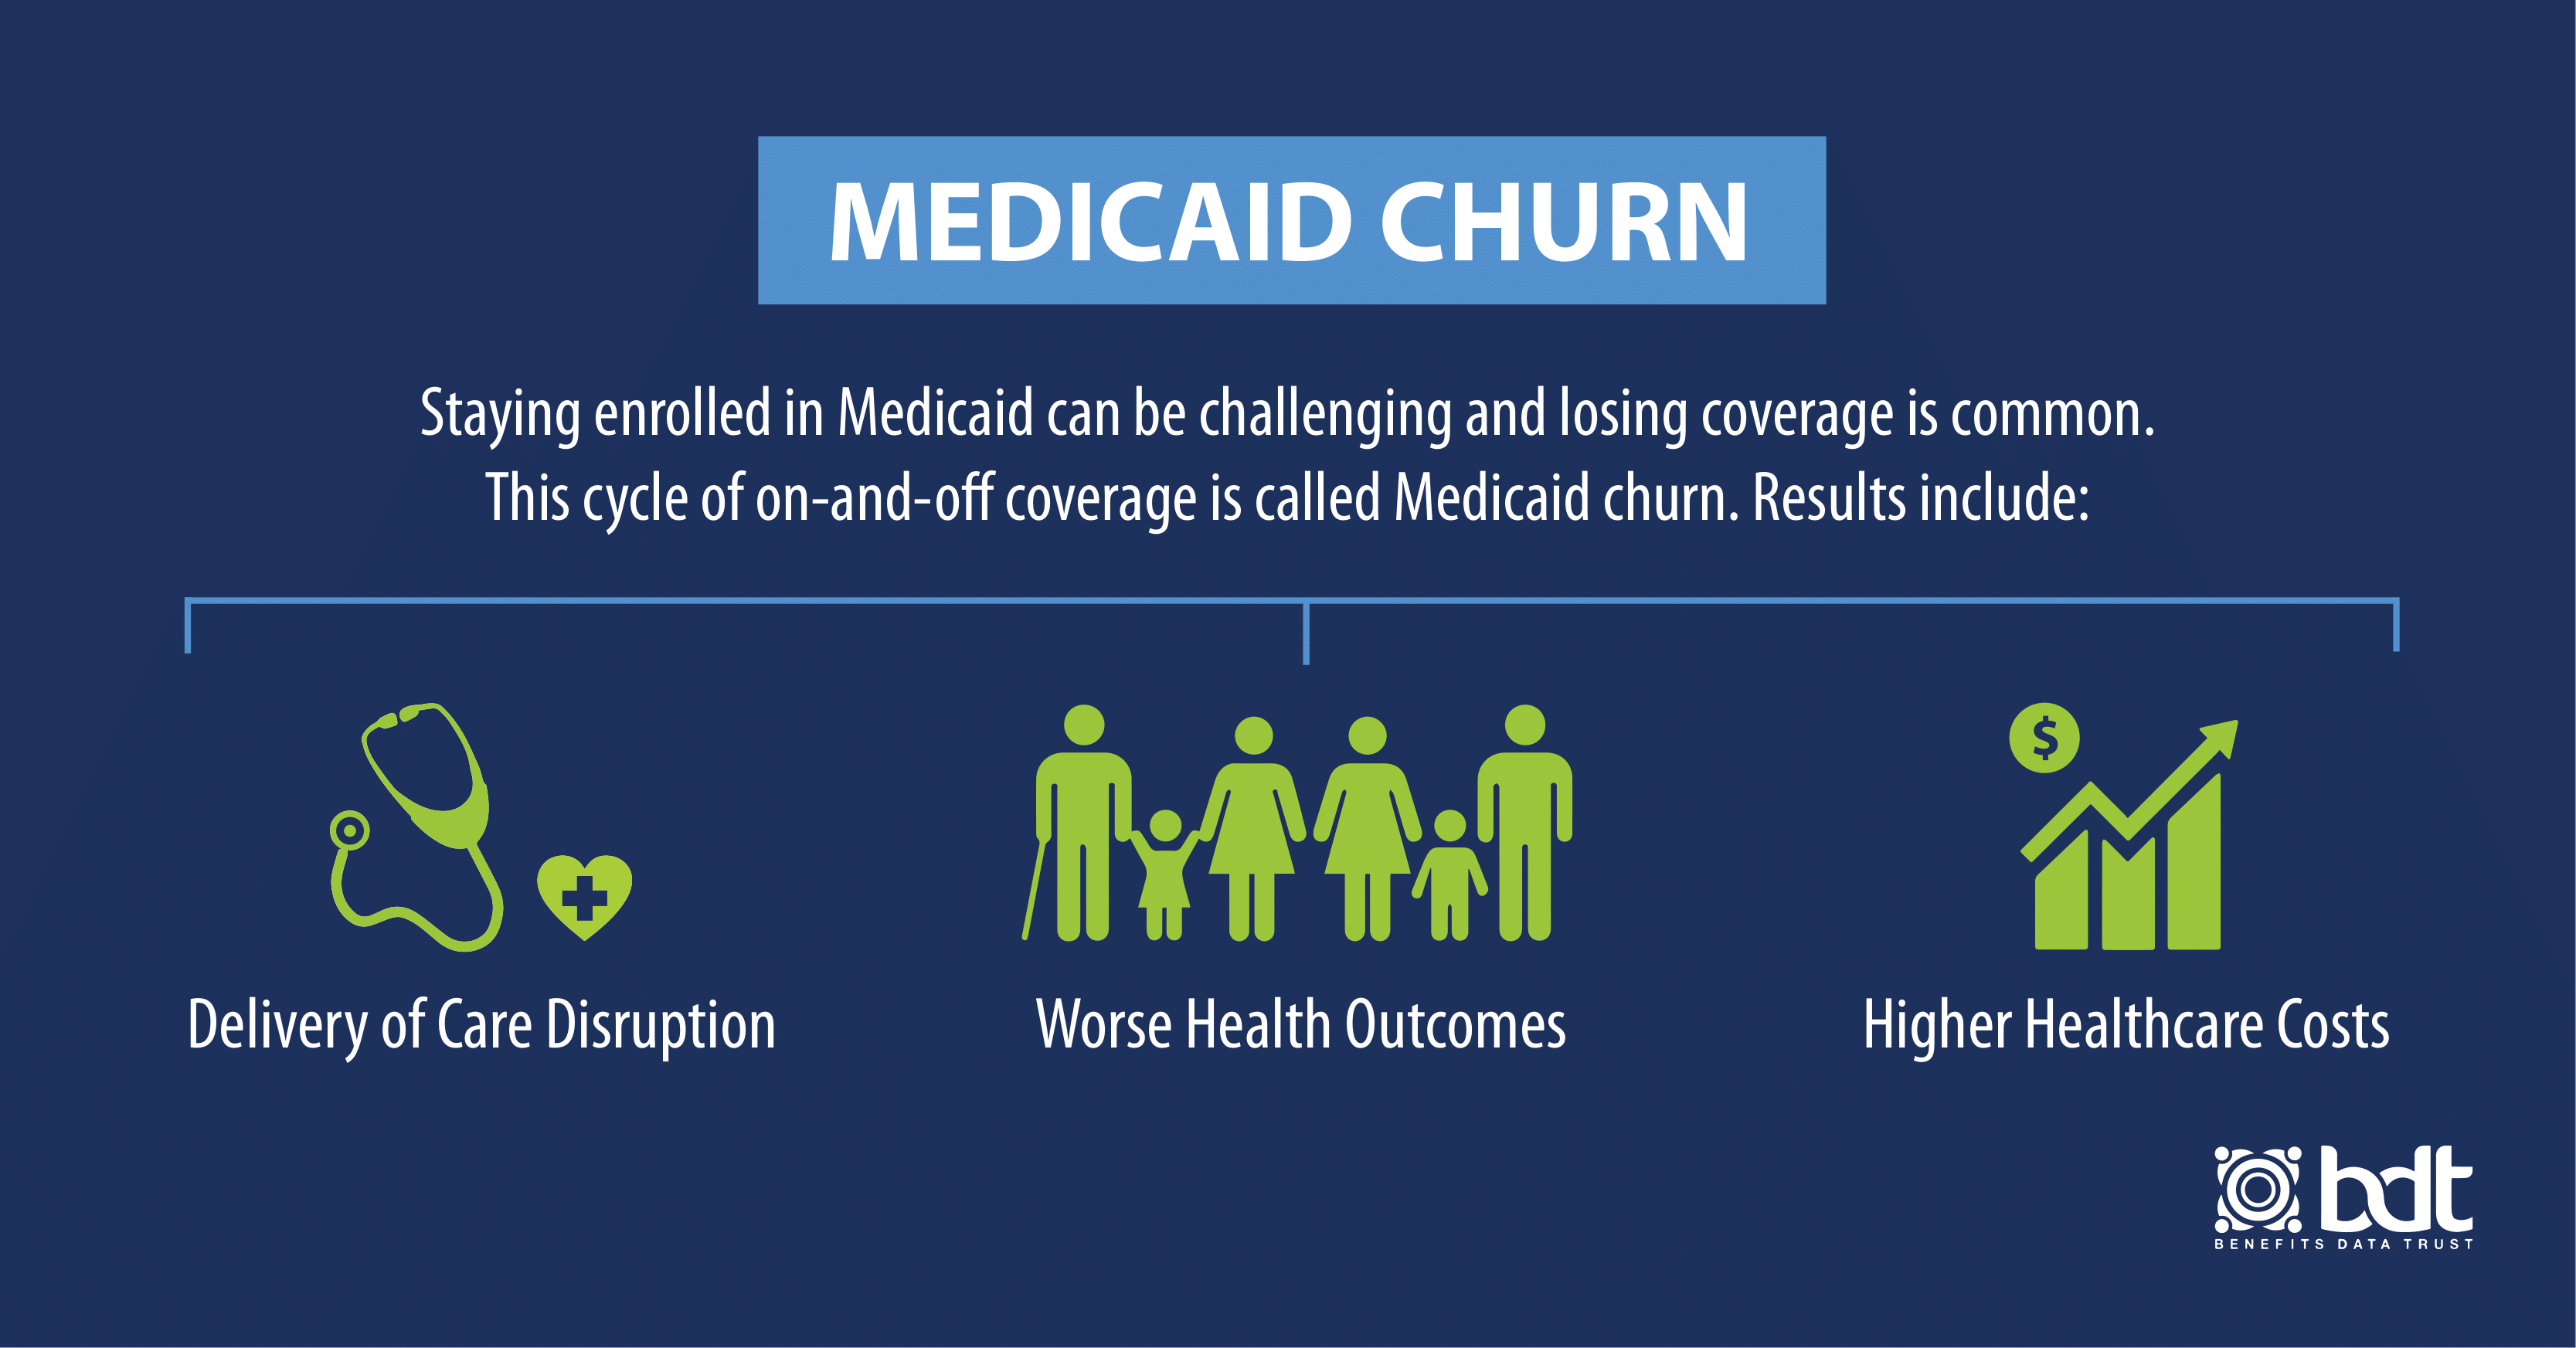 Medicaid churn